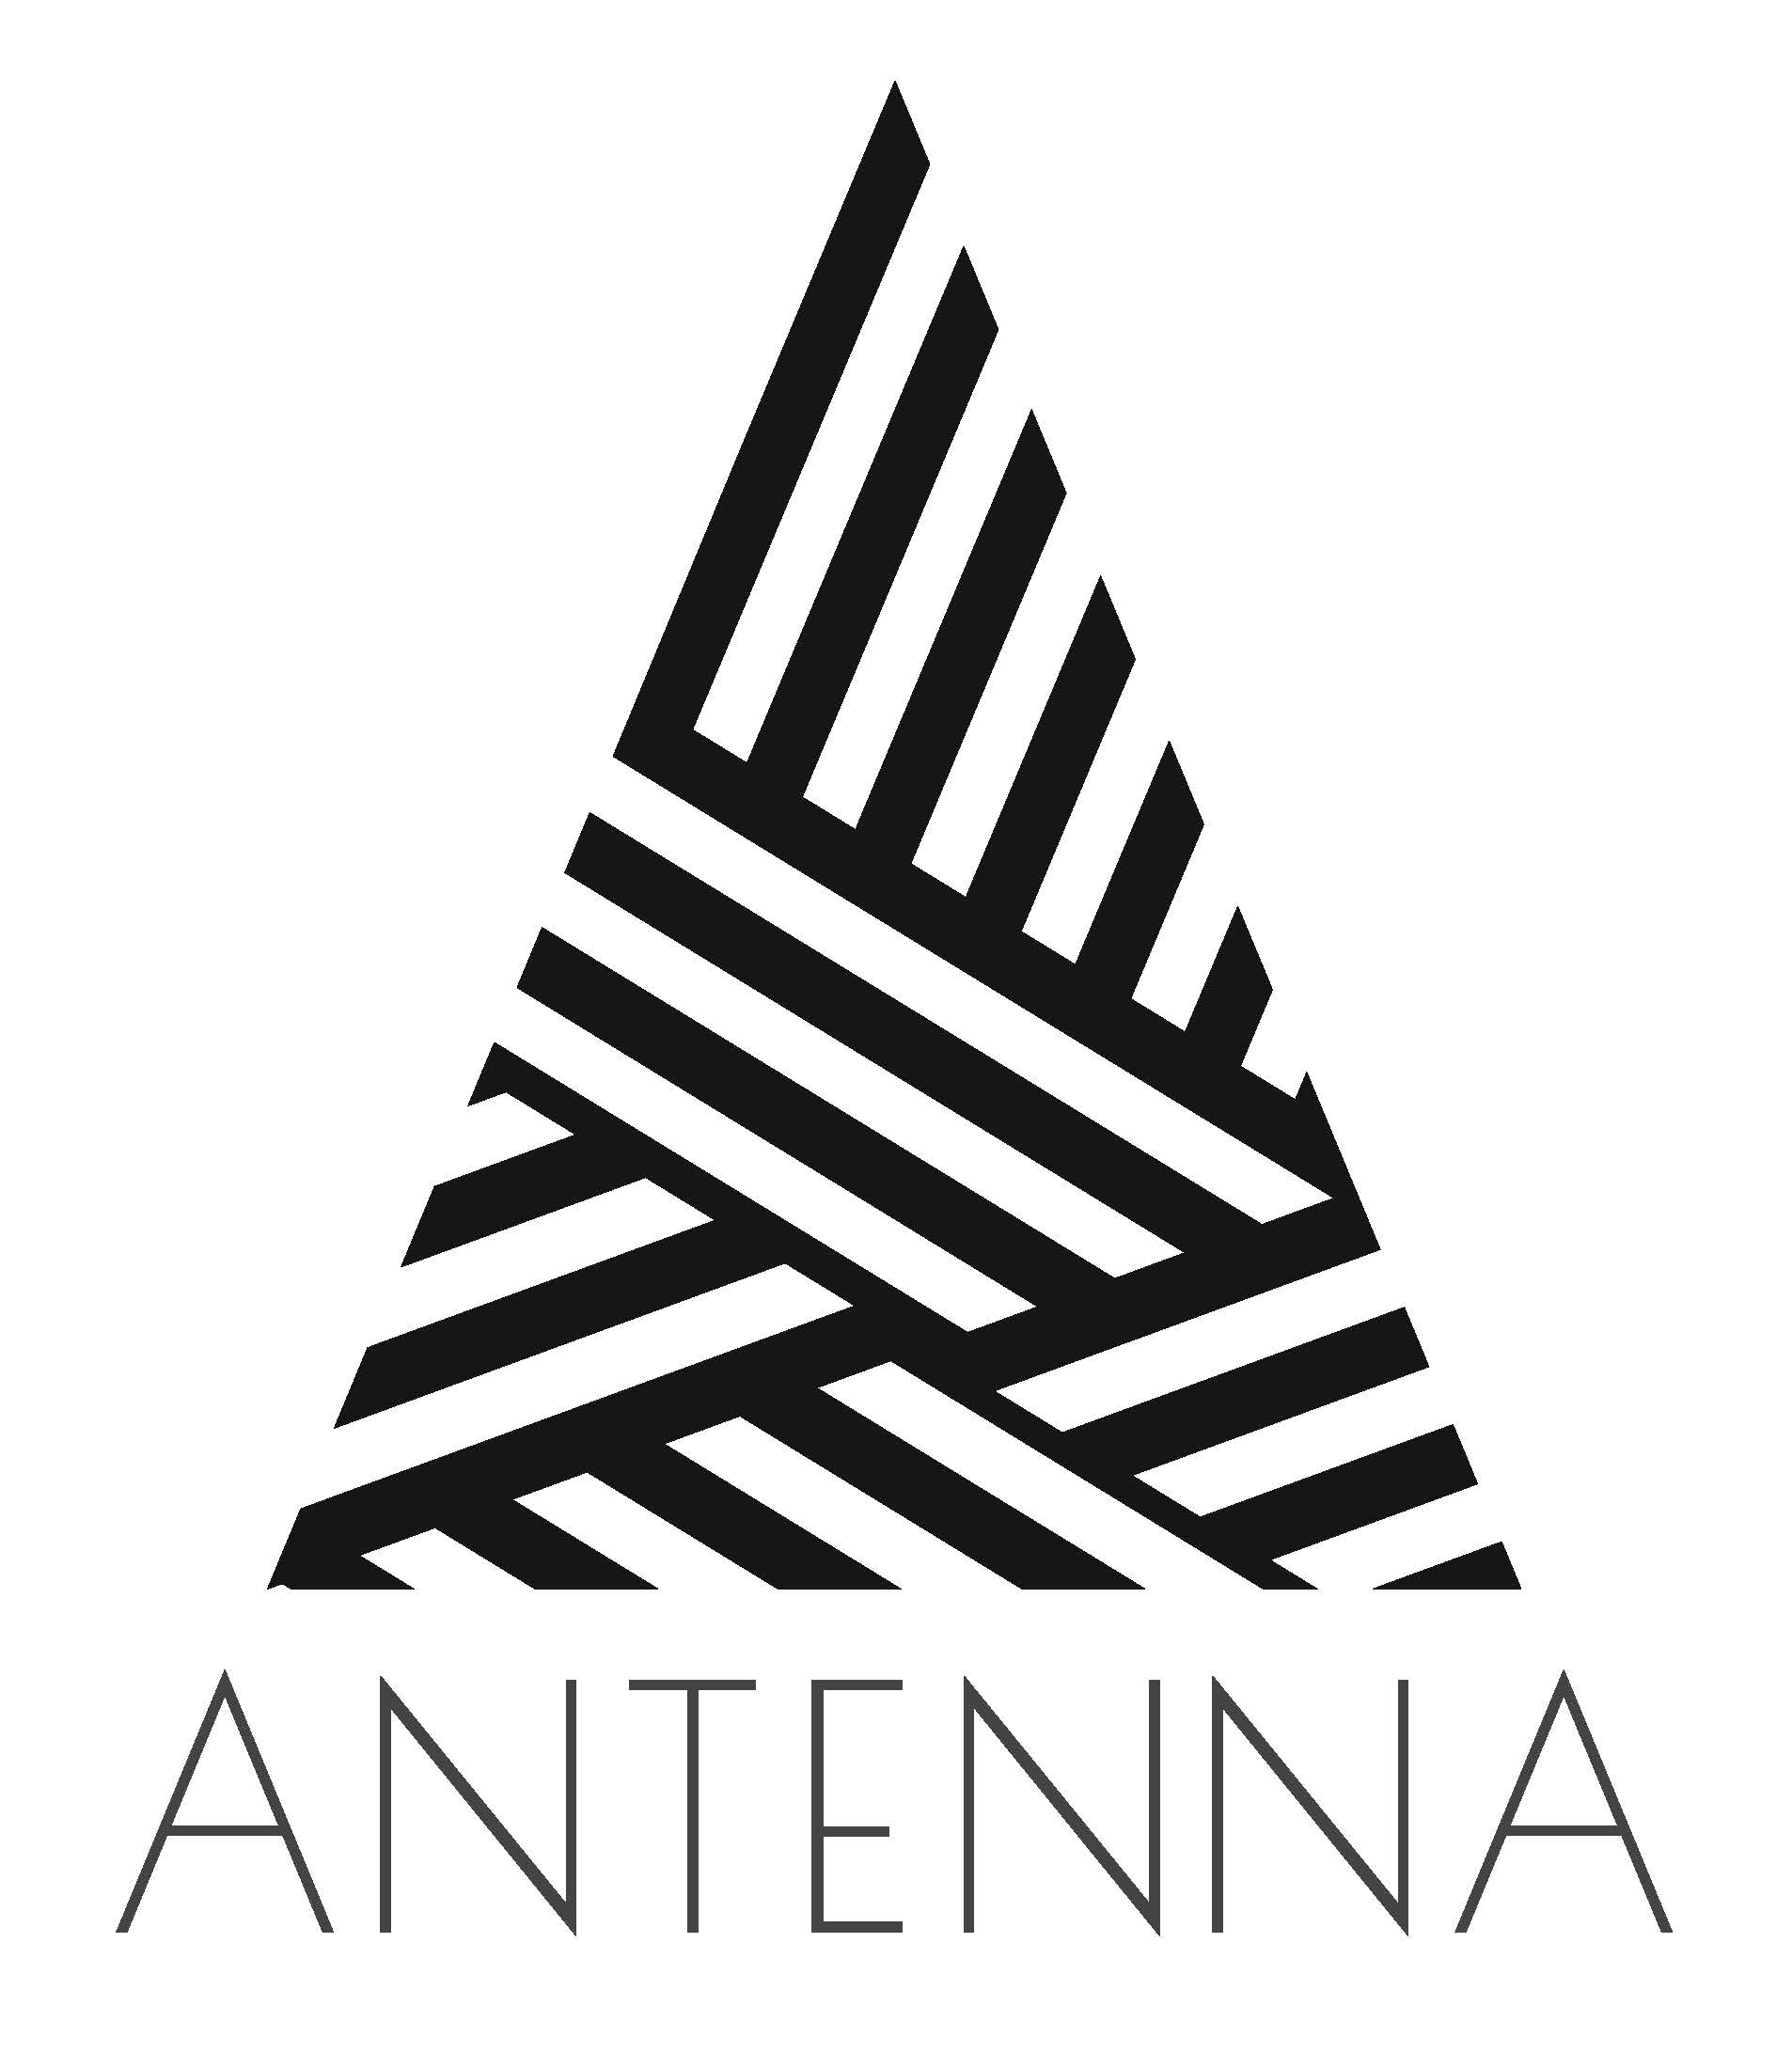 Antenna logo